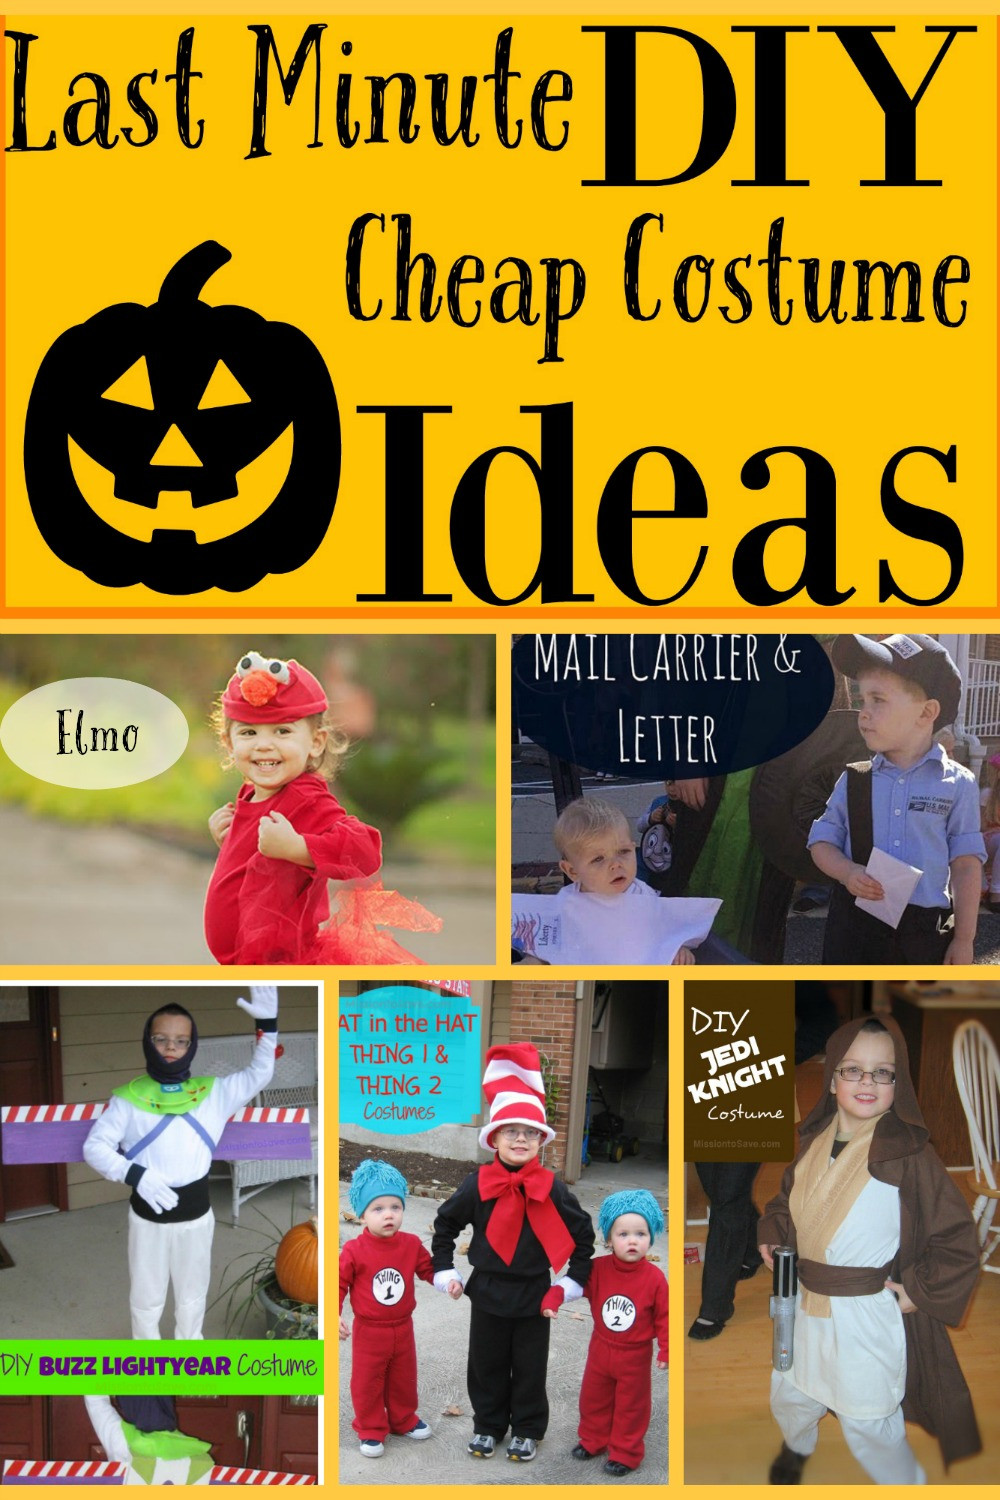 Last Minute DIY Costume
 Last Minute Cheap DIY Halloween Costume Round Up The